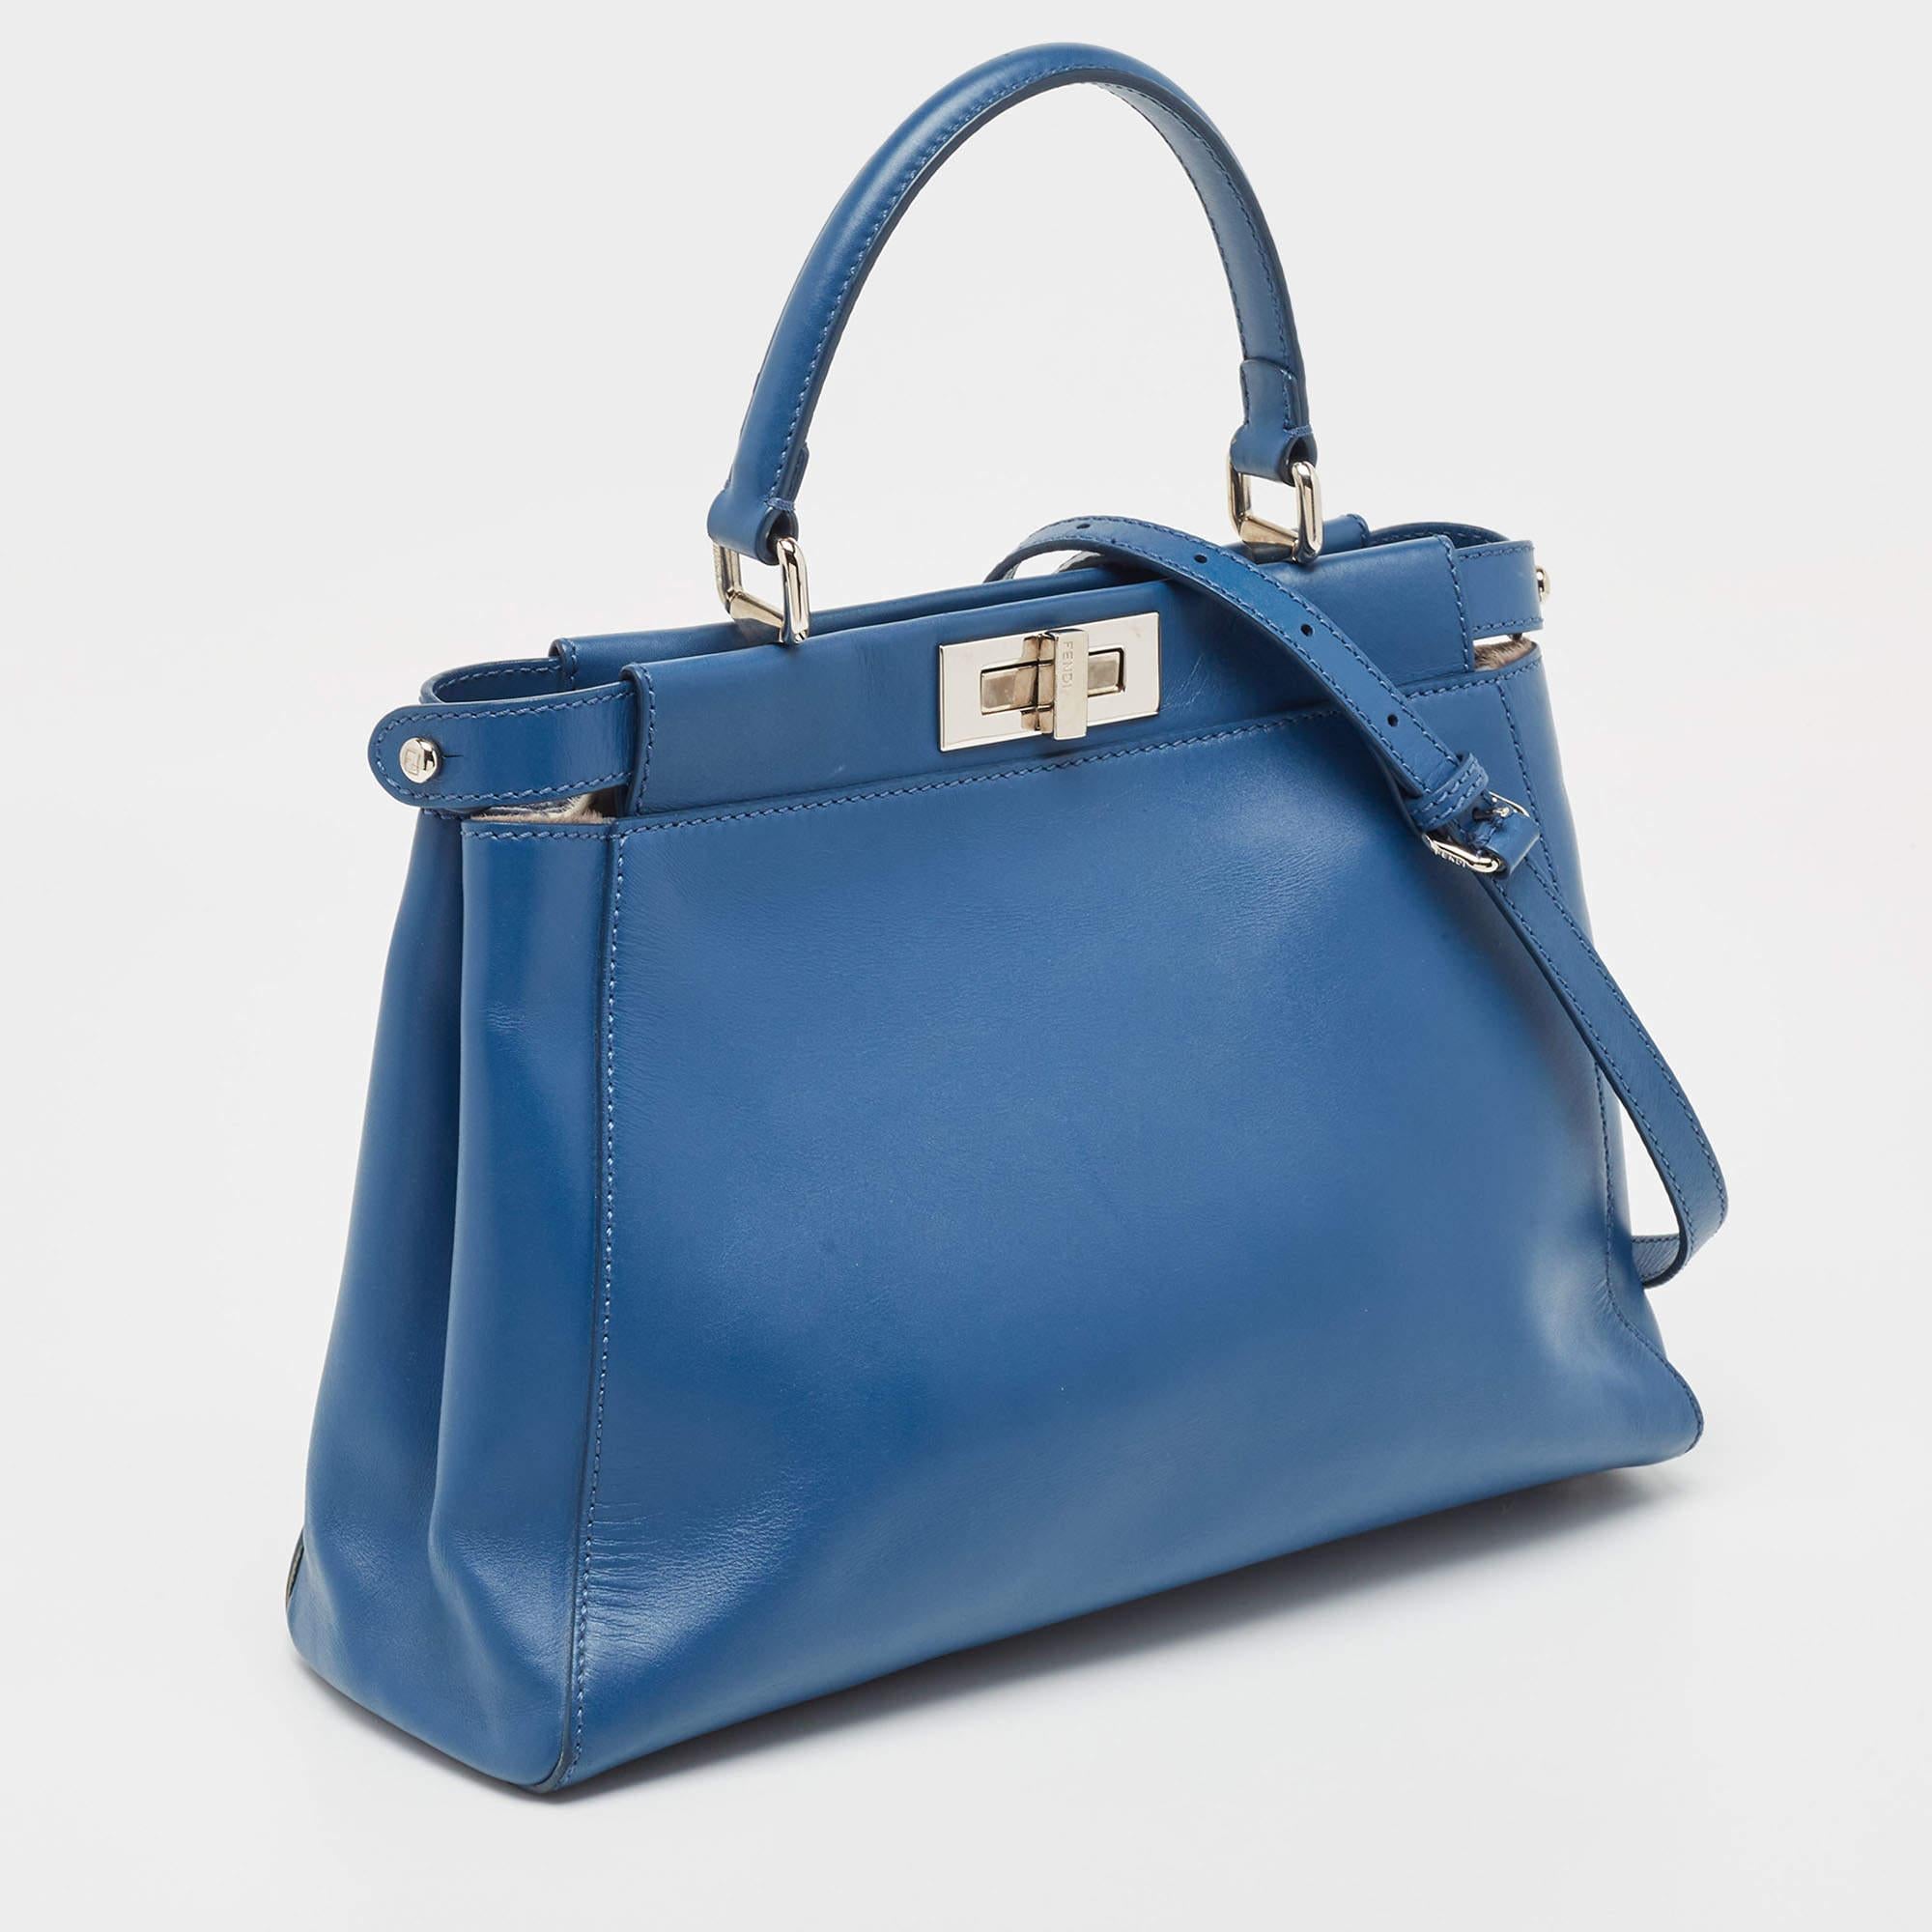 Fendi Blue Leather Medium Peekaboo Top Handle Bag In Good Condition For Sale In Dubai, Al Qouz 2